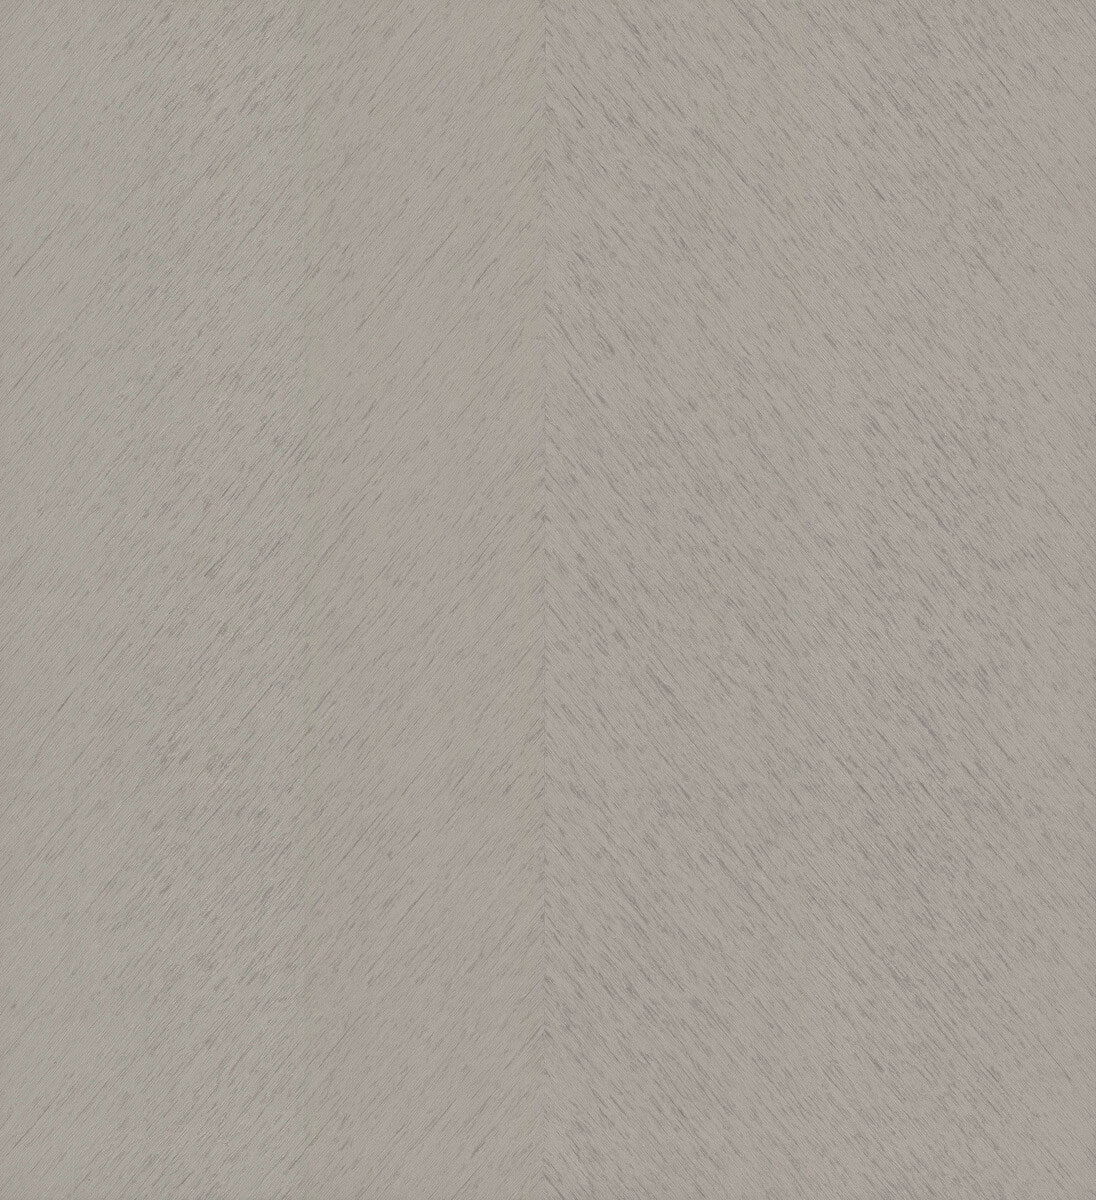 Dazzling Dimensions Volume II Etched Chevron Wallpaper - Gray